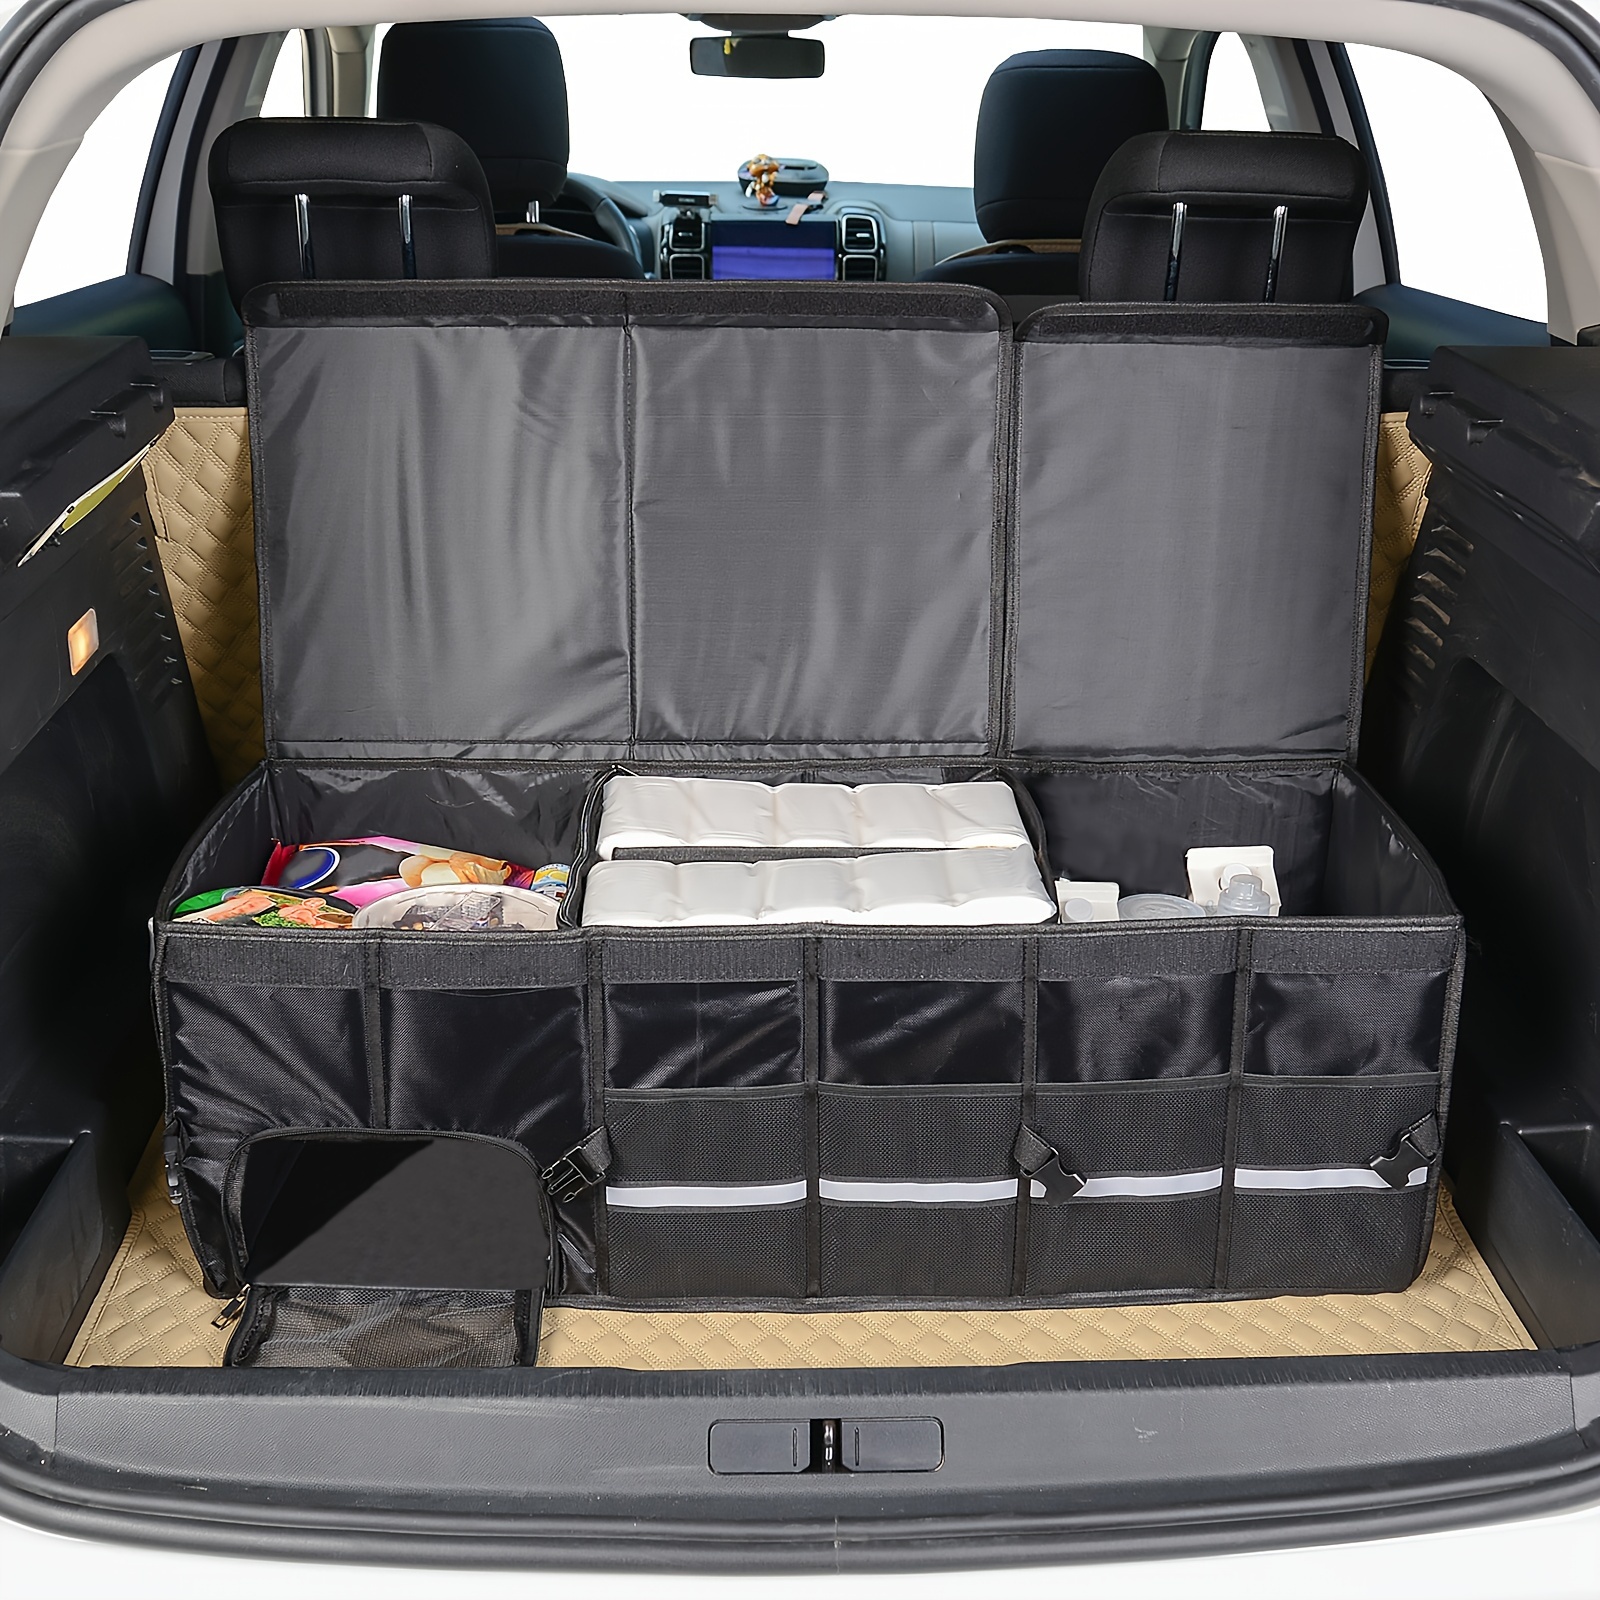 Caja de almacenamiento para maletero de coche, organizador plegable  extragrande con 3 compartimentos